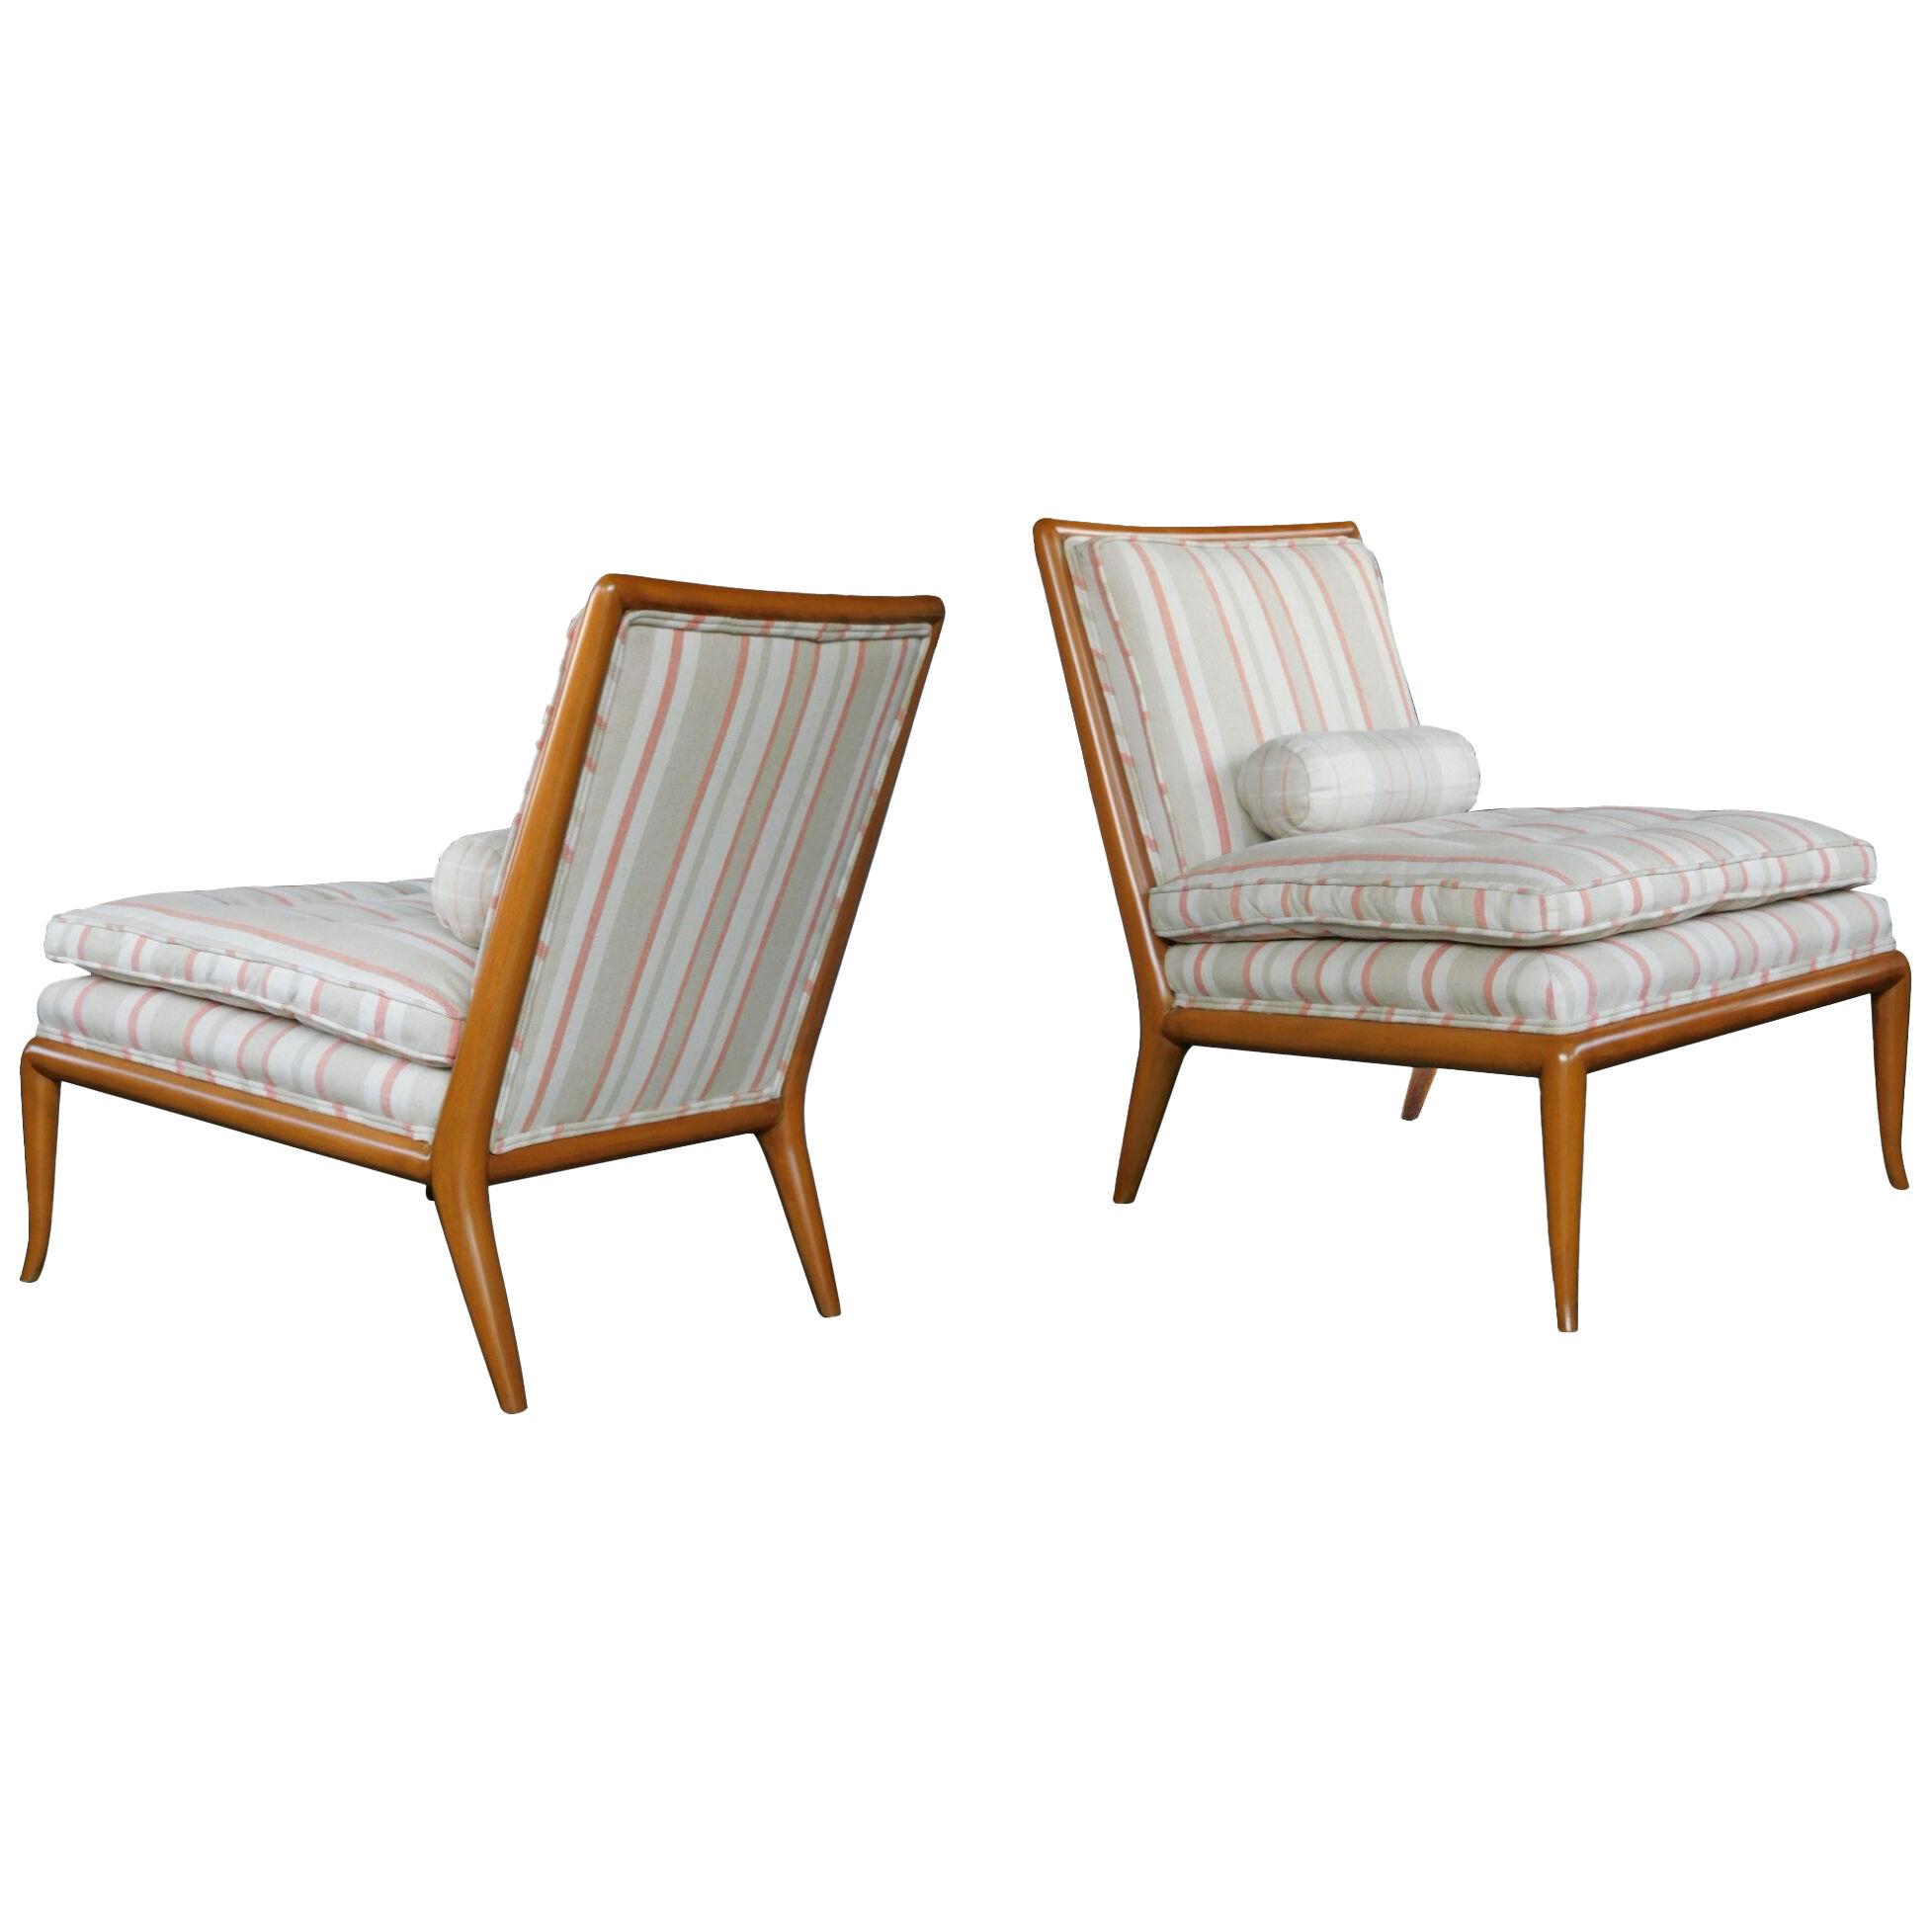 Pair of T.H. Robsjohn Gibbings for Widdicomb model no WMB walnut slipper chairs